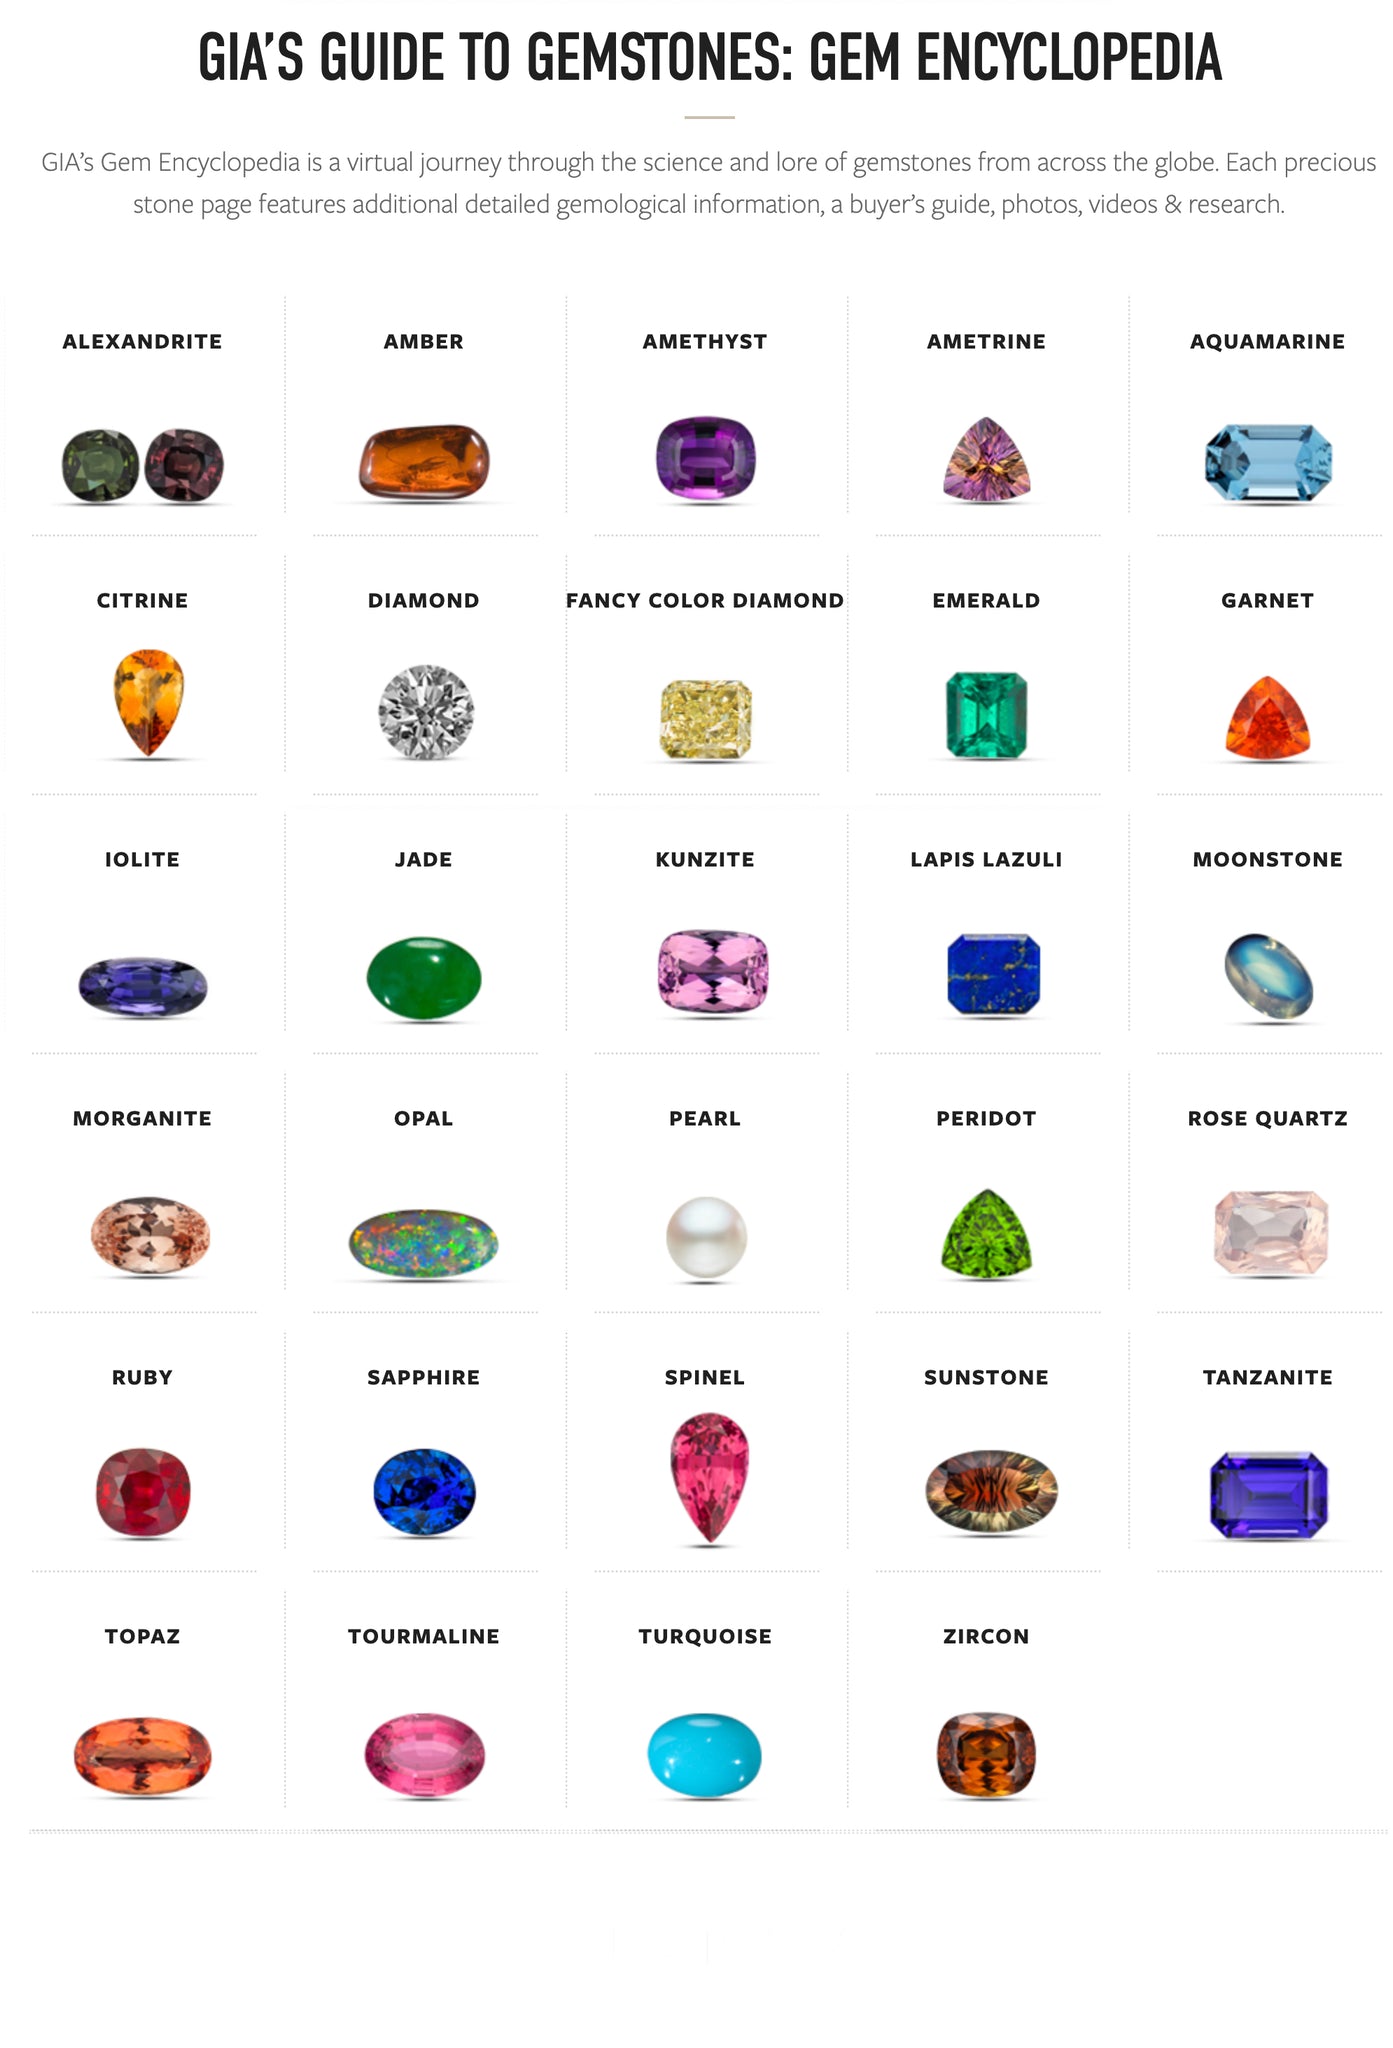 Gem Encyclopedia is a virtual journey for Global Gemstones